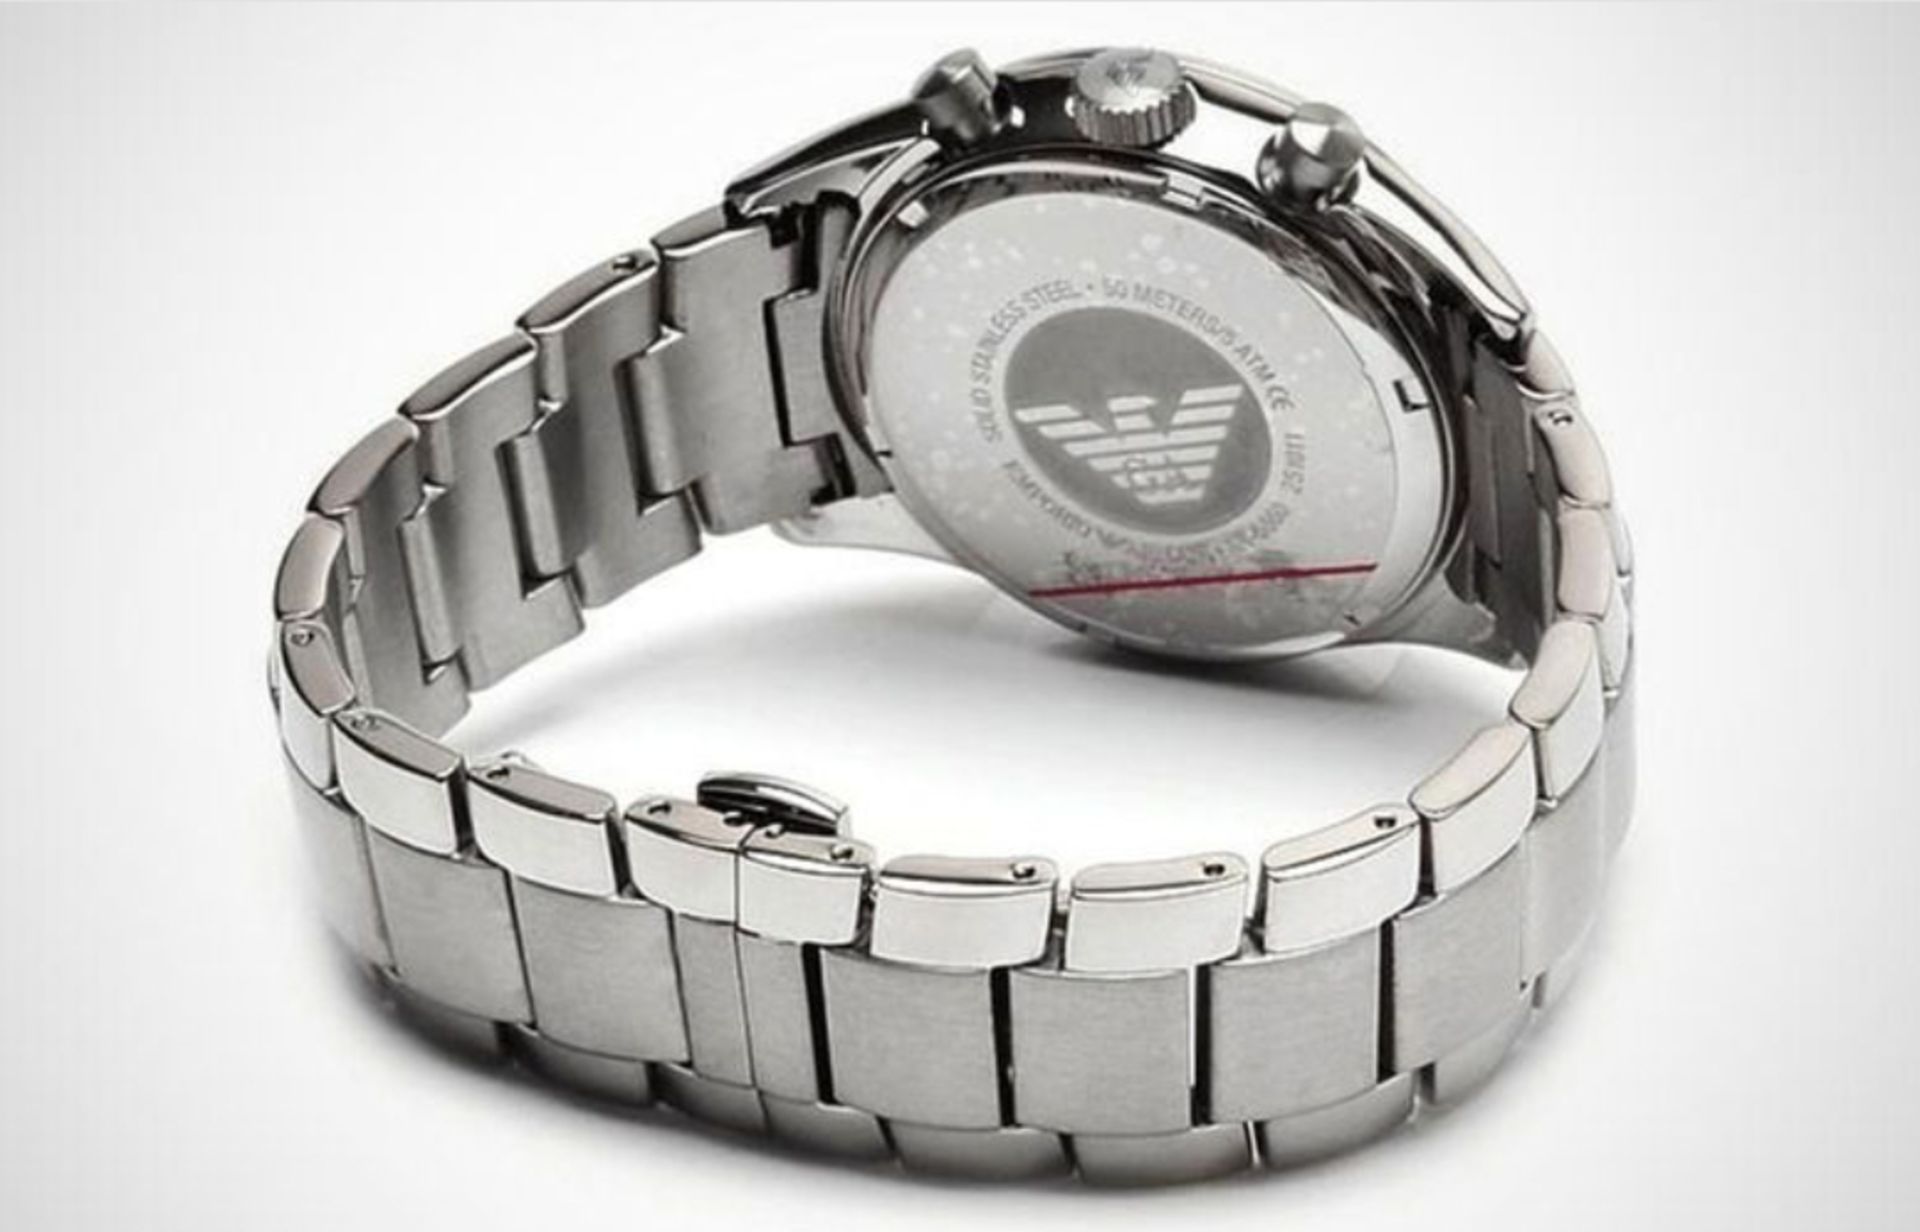 Emporio Armani AR5860 Quartz Men's Stainless Steel Chronograph Watch - Image 4 of 7